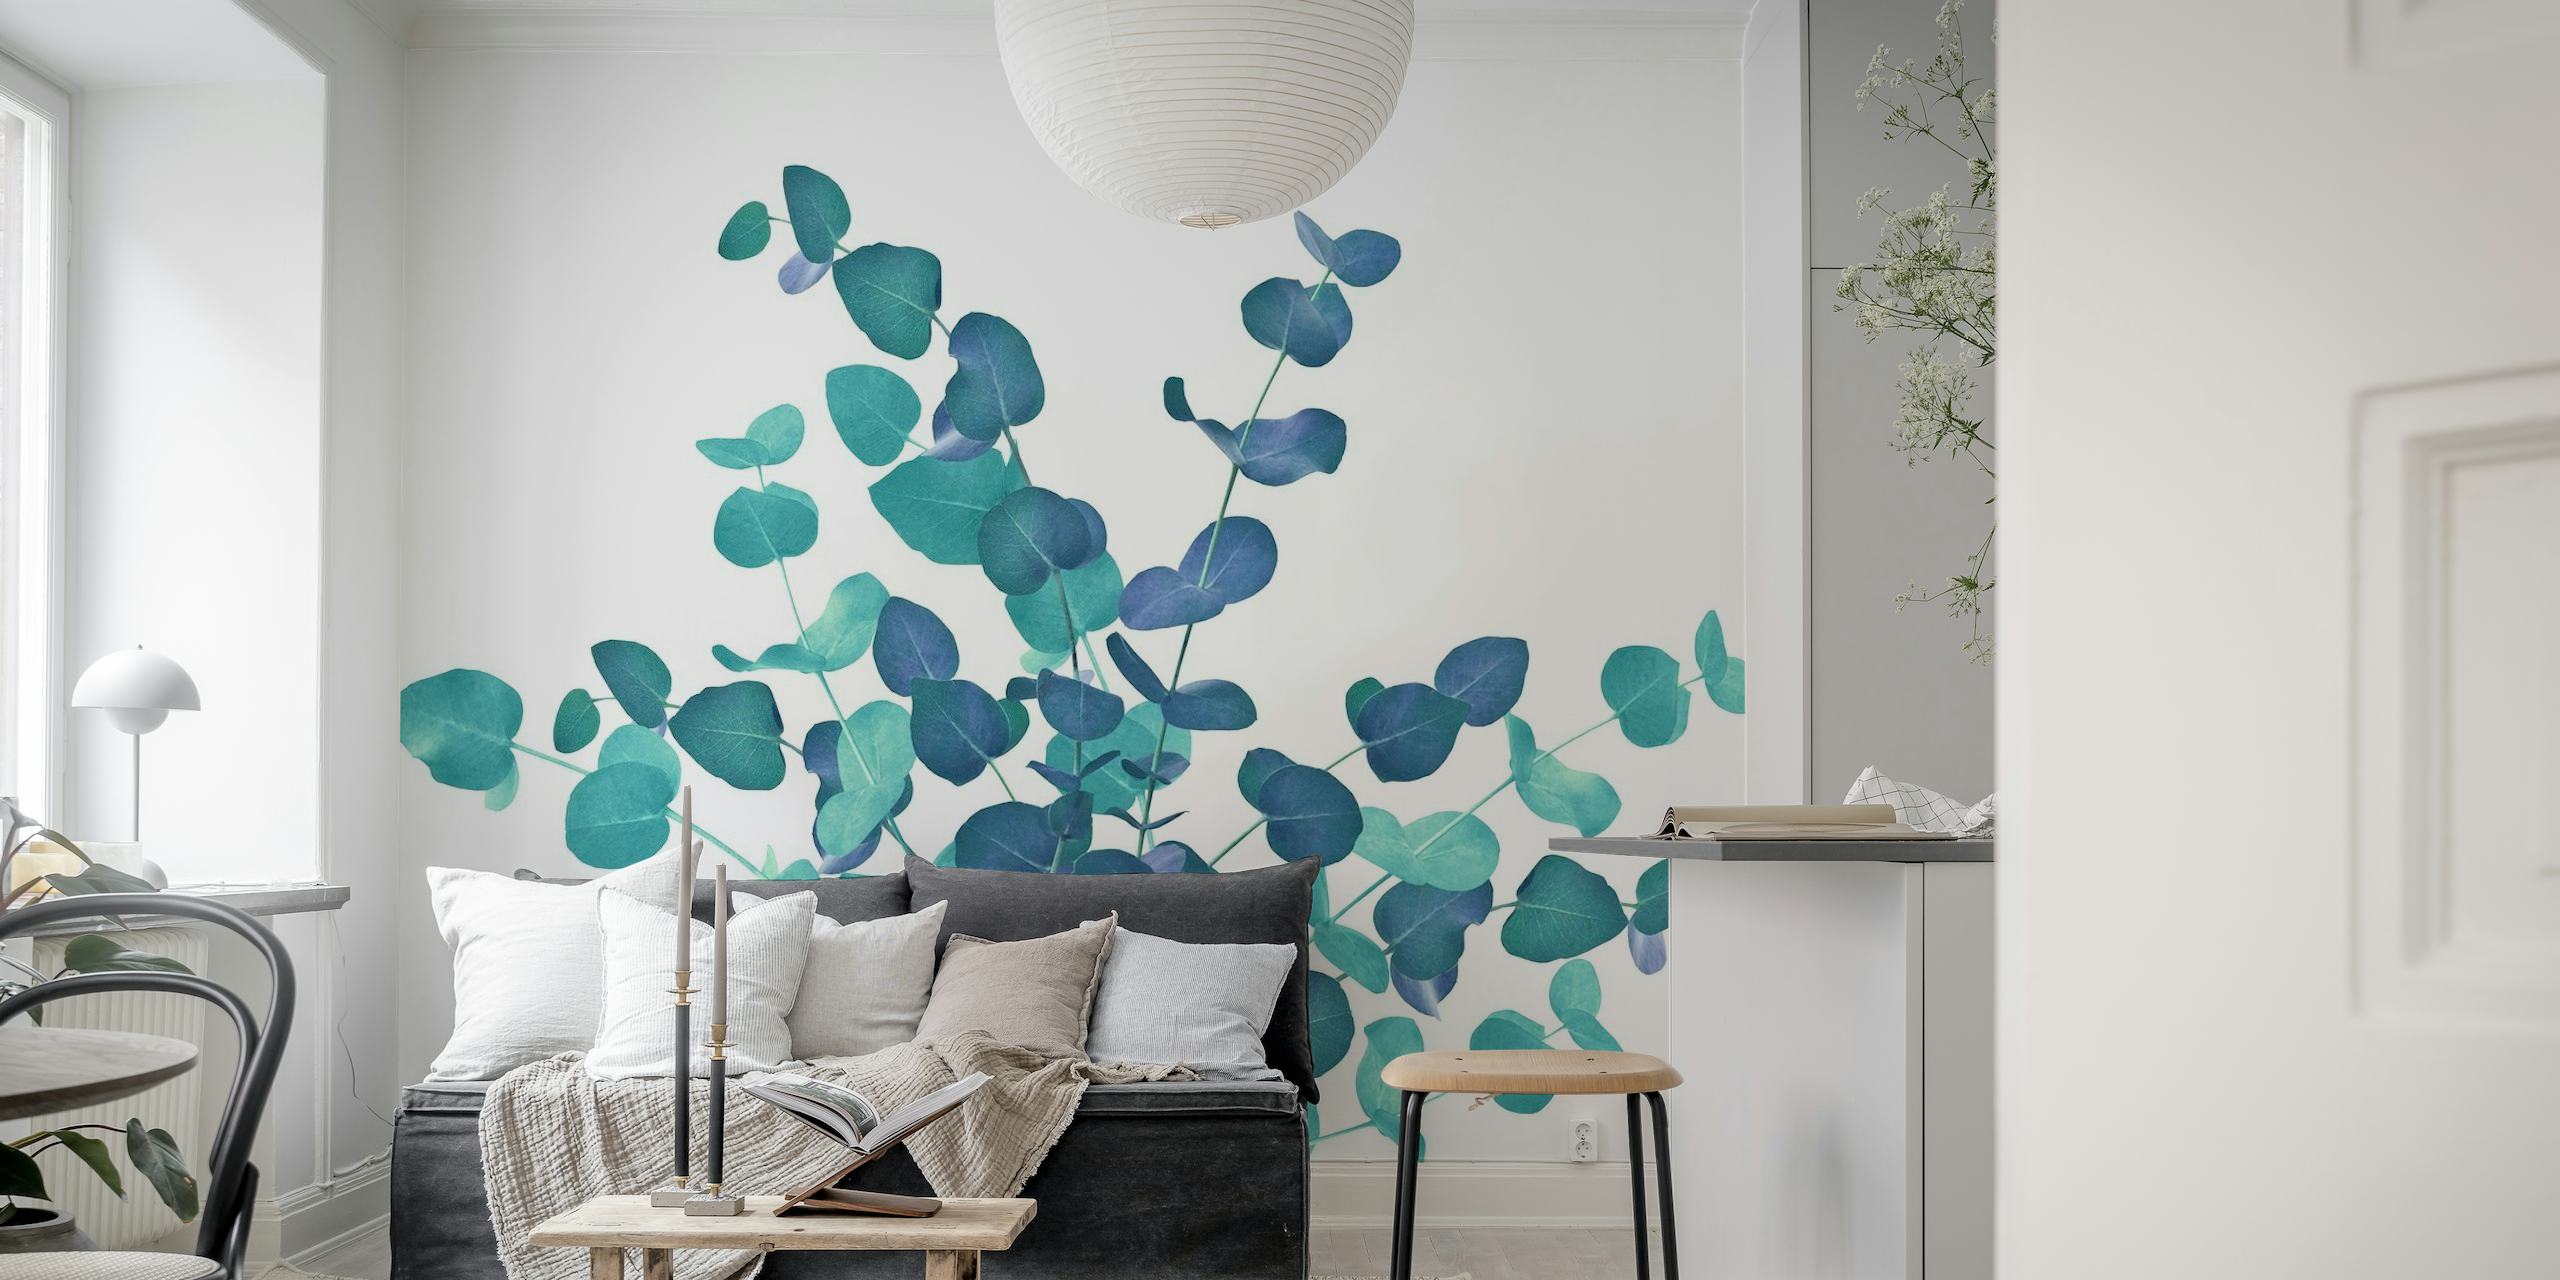 Eucalyptus leaves wall mural in blue hues, creating a serene botanical display